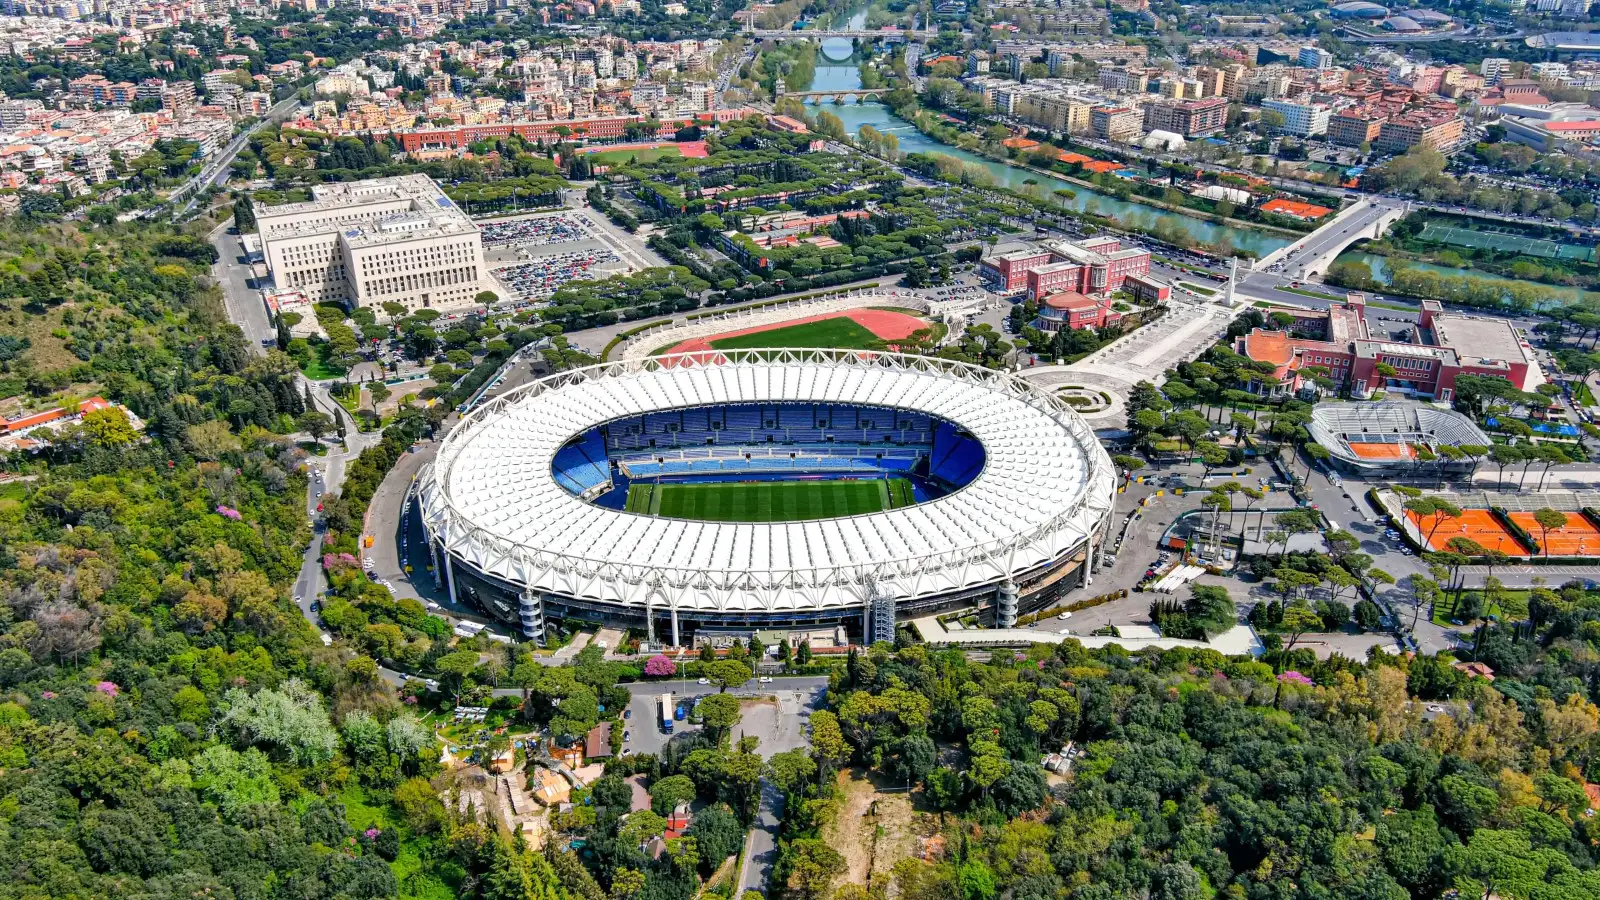 Stadio Olimpico from the sky